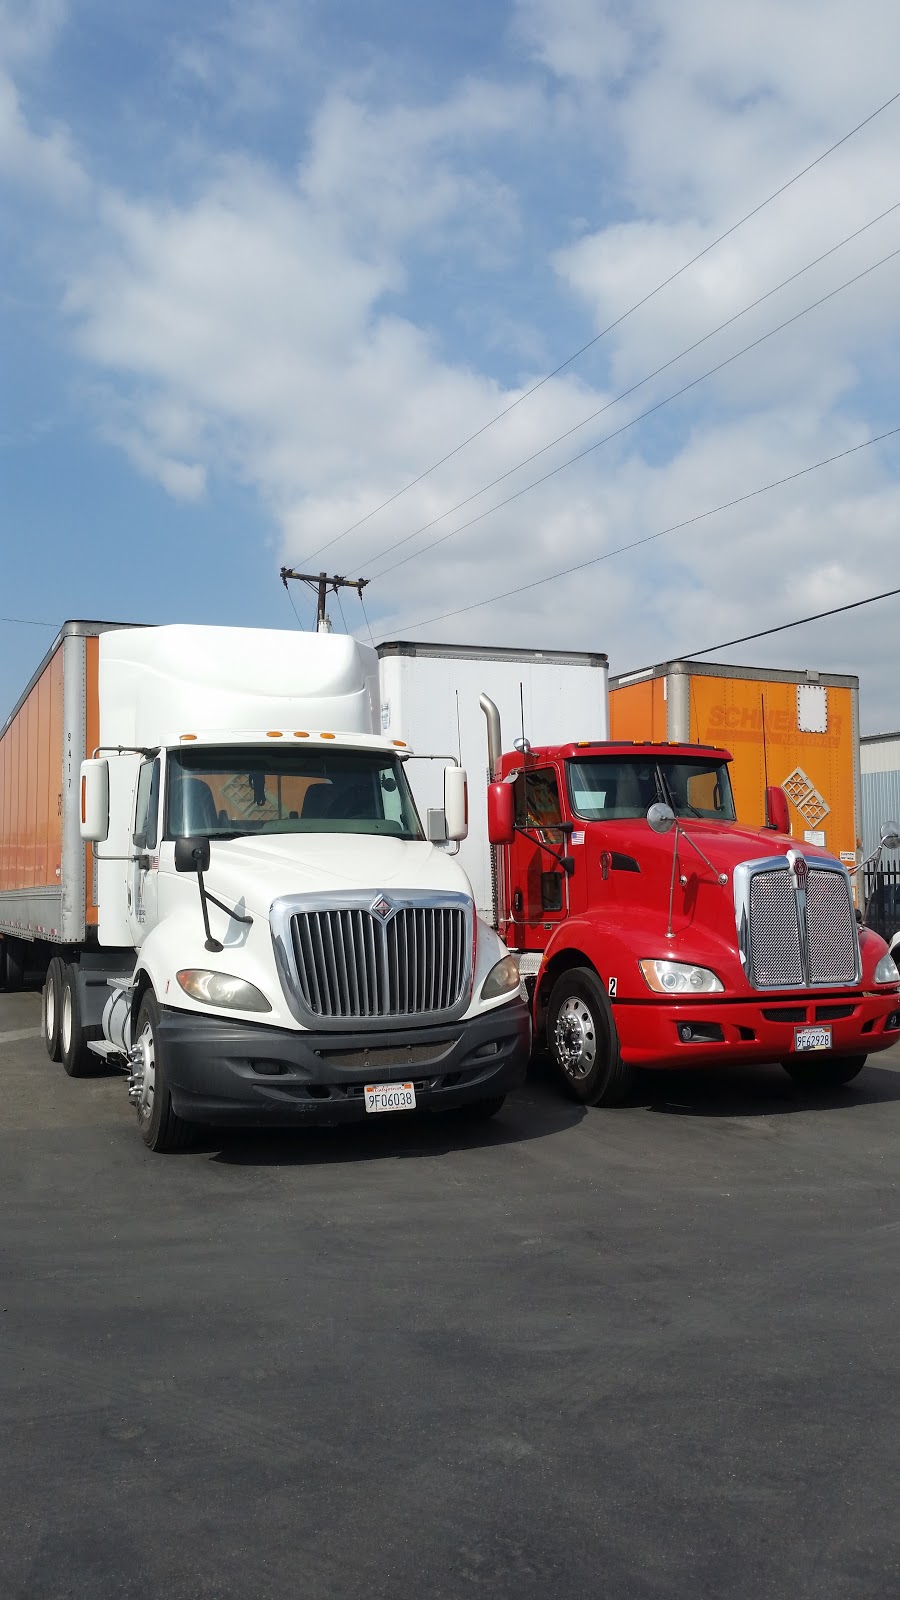 Gallop Warehouse & Distribution INC. | 1561 Chapin Rd, Montebello, CA 90640, USA | Phone: (323) 544-7774